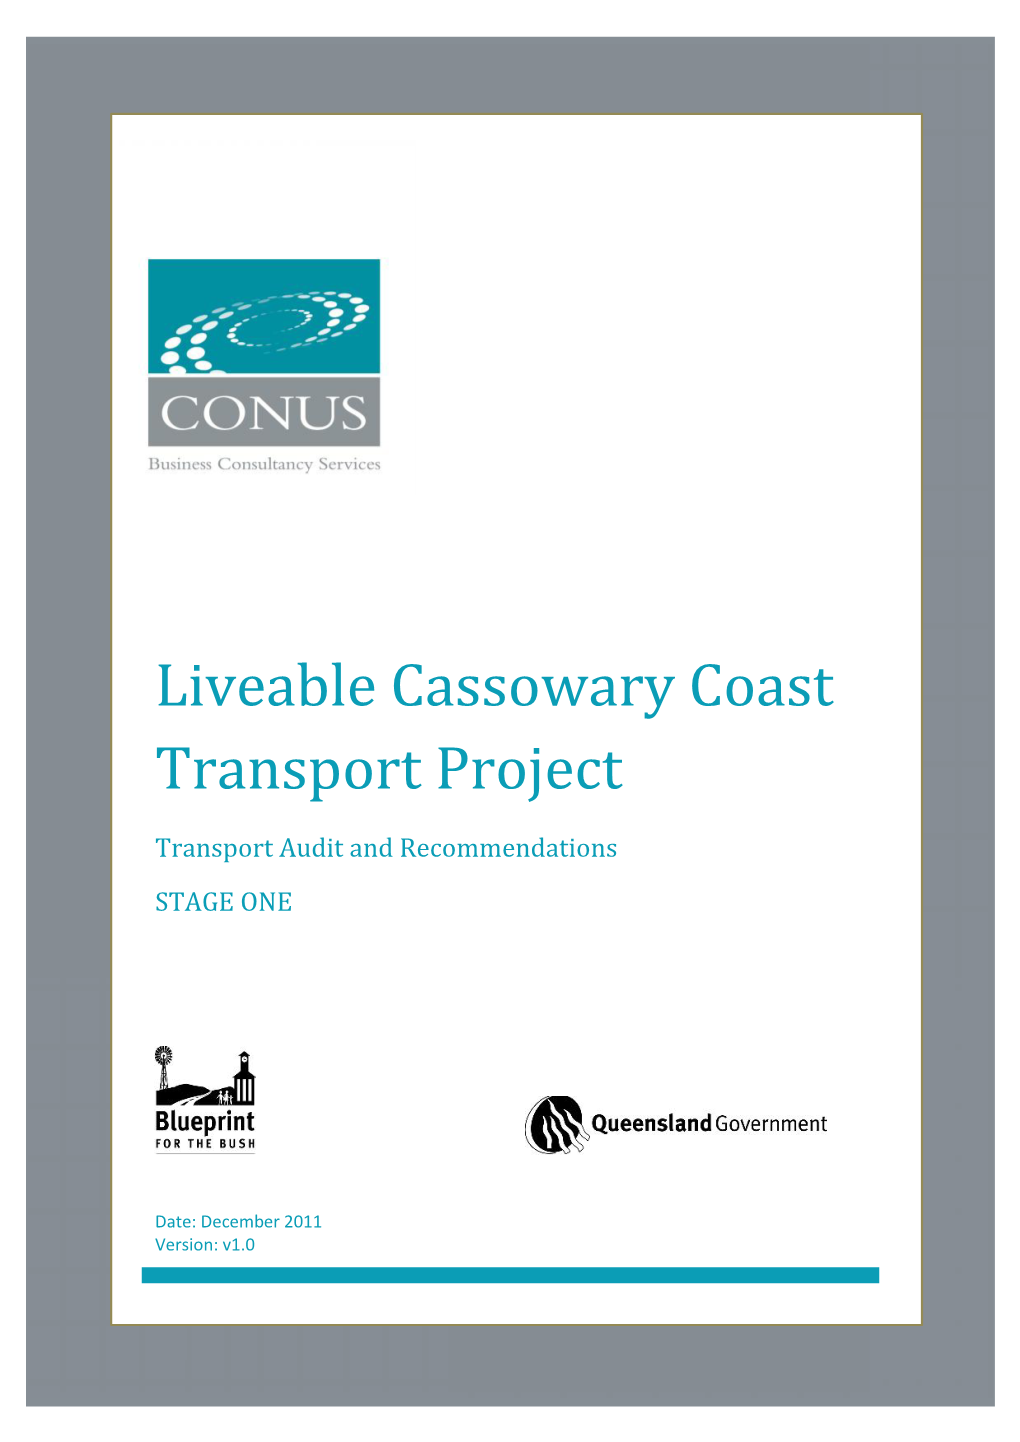 Liveable Cassowary Coast Transport Project